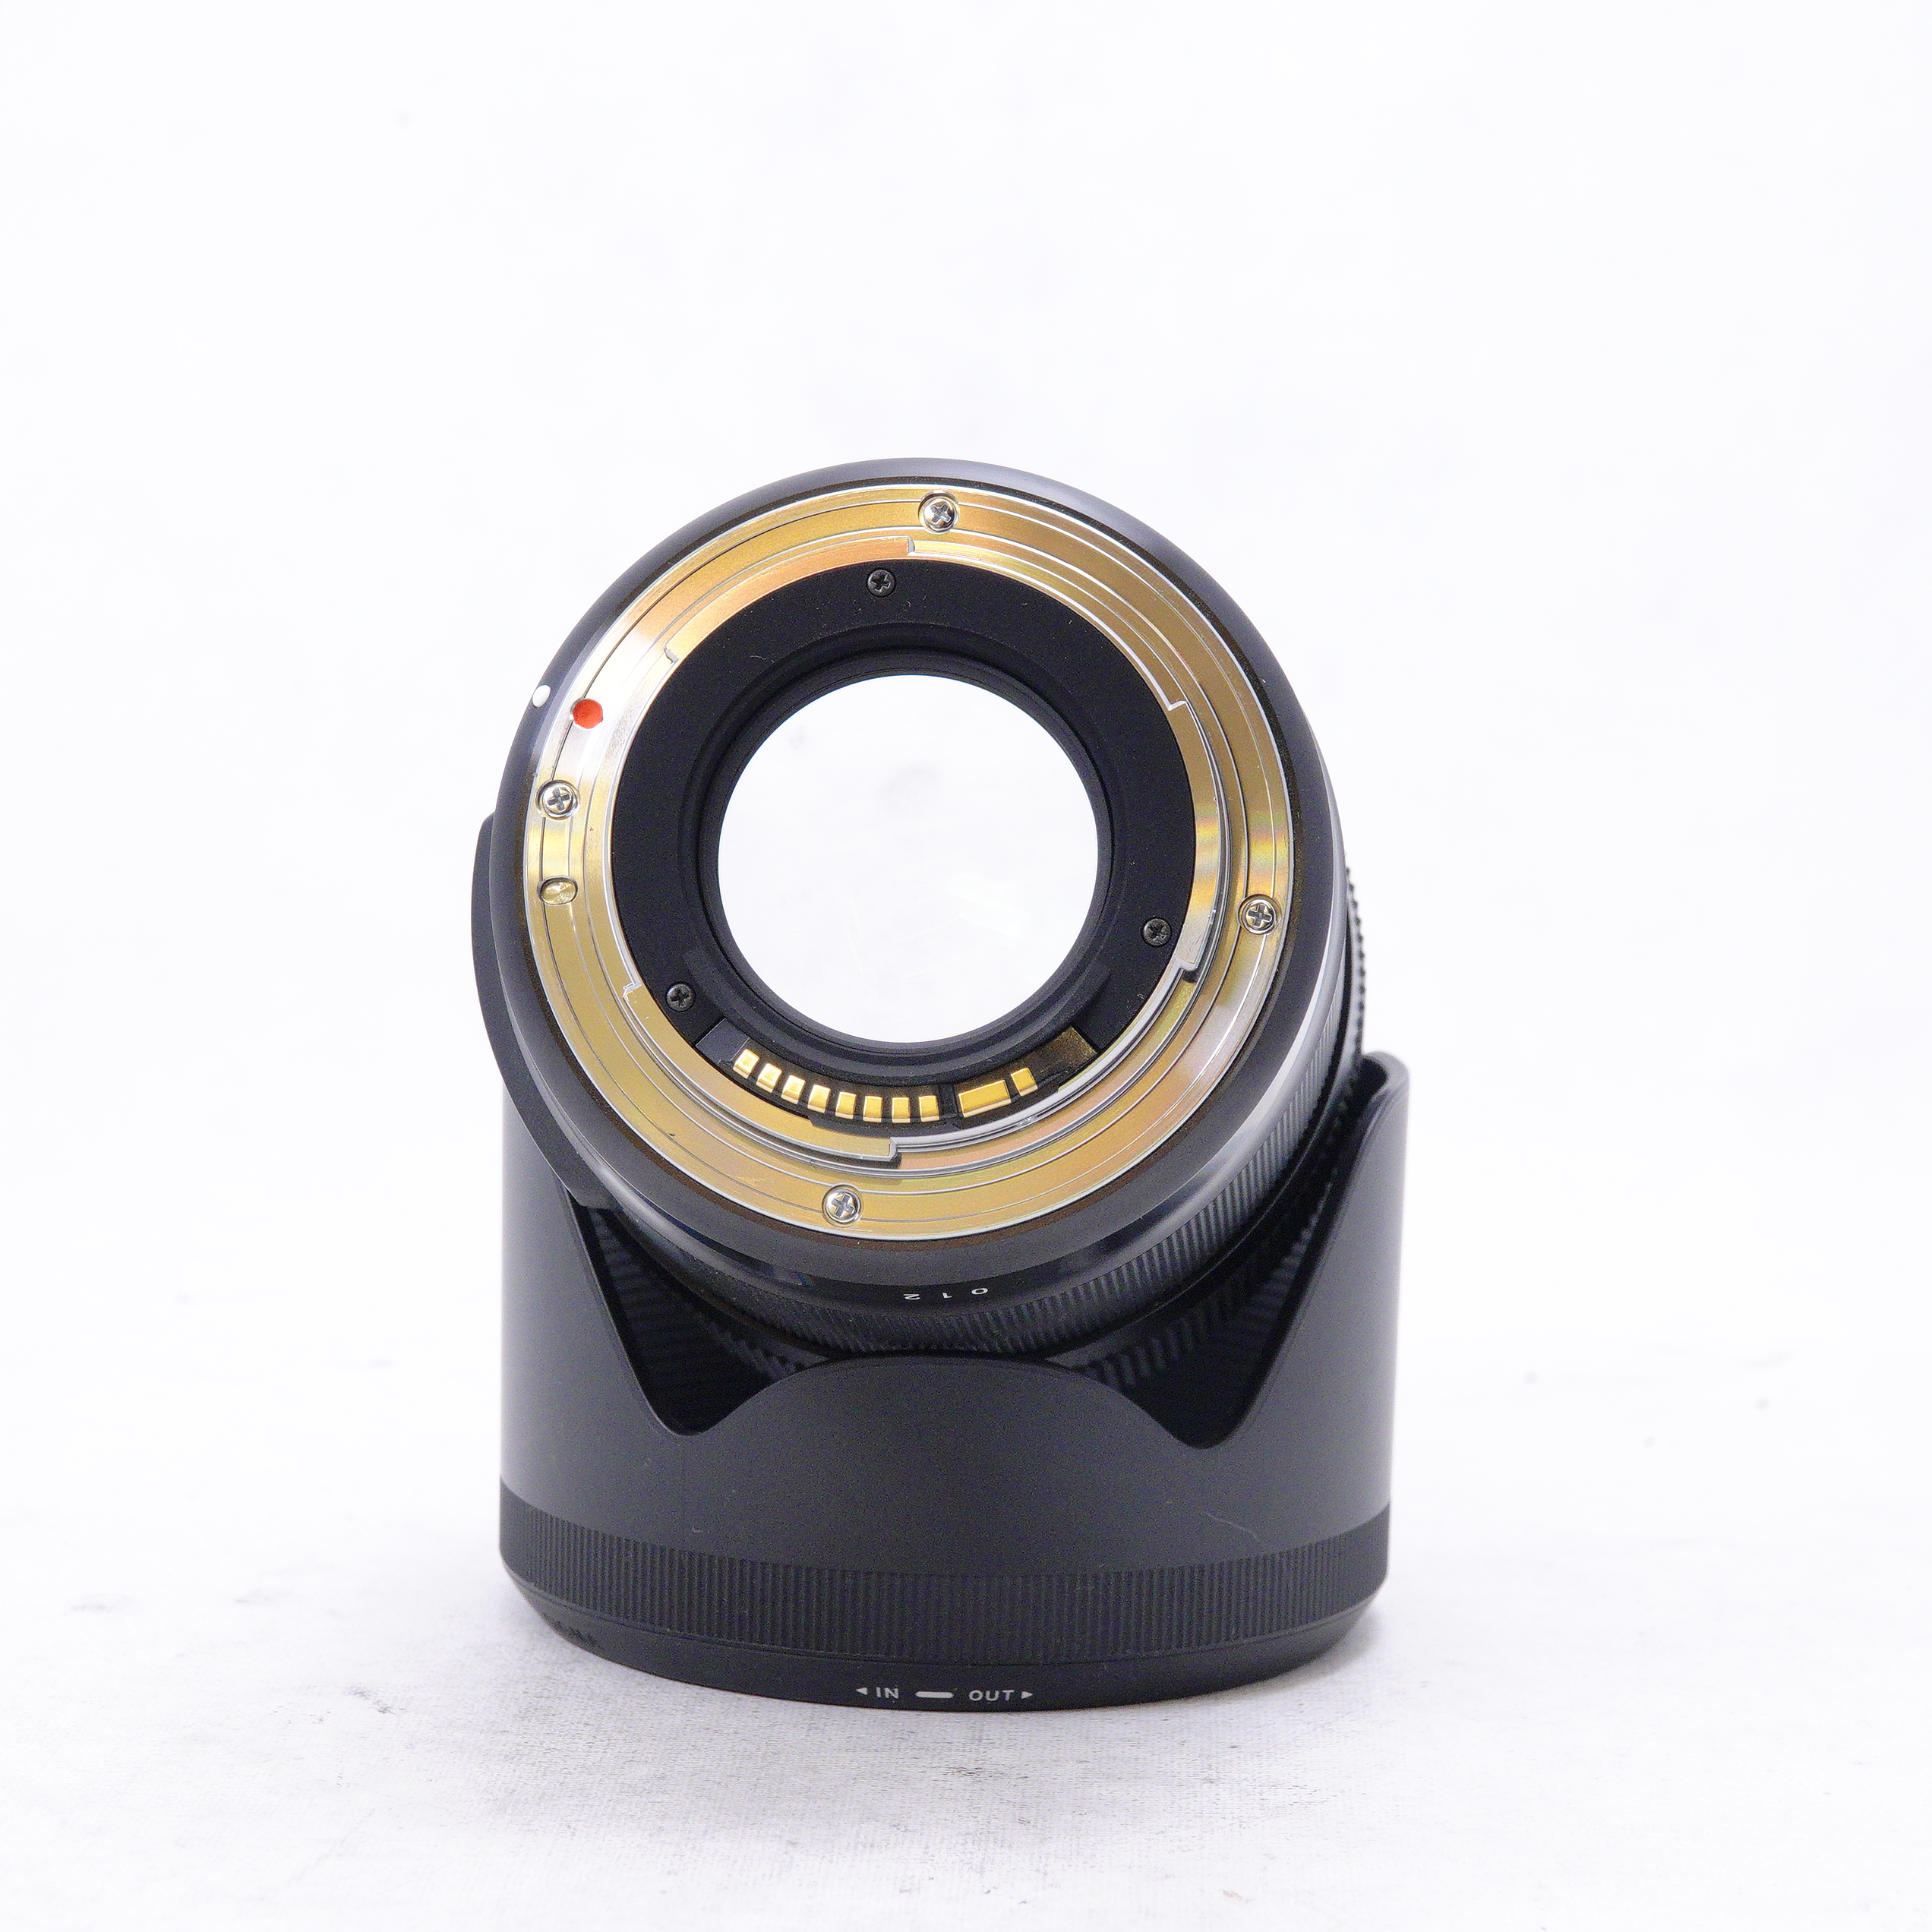 Lente Sigma 35mm f1.4 DG ART (Canon EF) - Usado